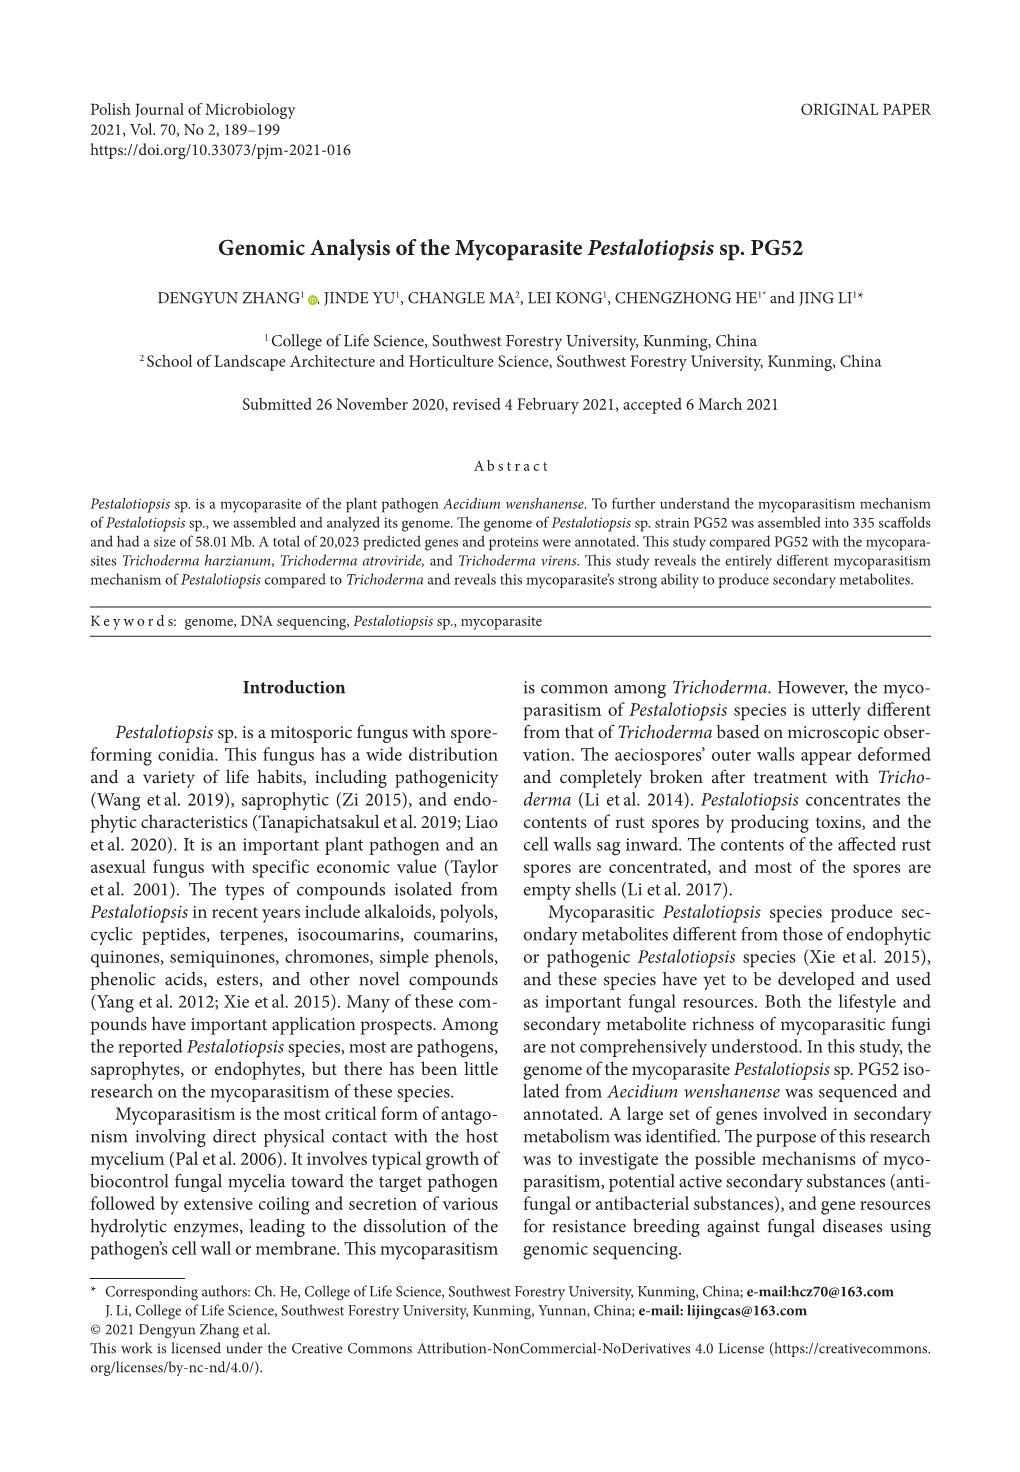 Genomic Analysis of the Mycoparasite Pestalotiopsis Sp. PG52